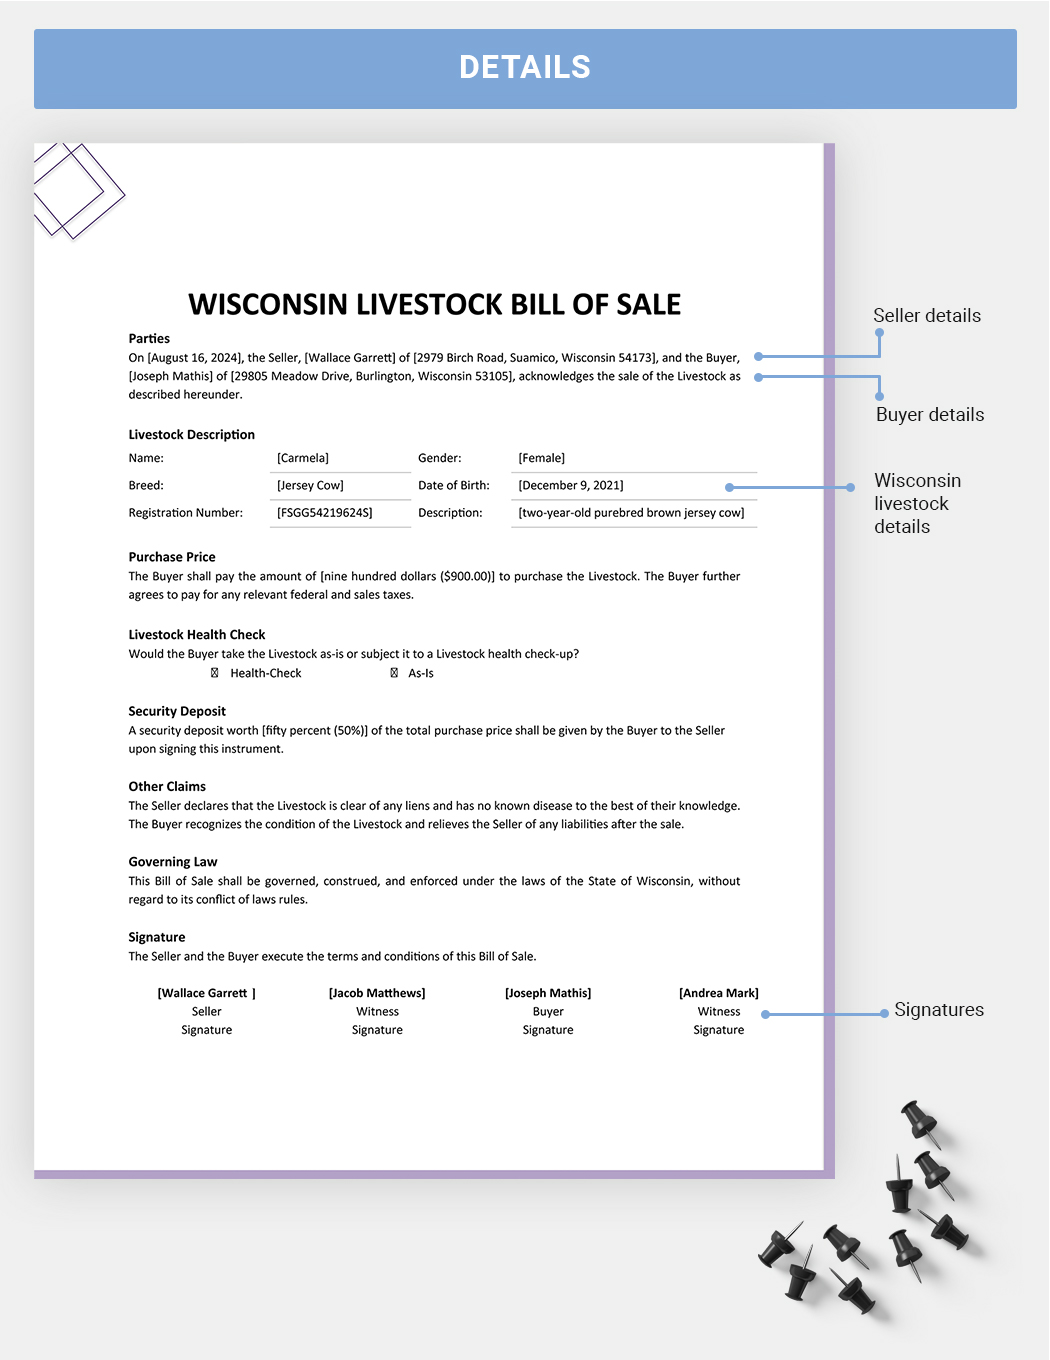 Wisconsin Livestock Bill of Sale Template